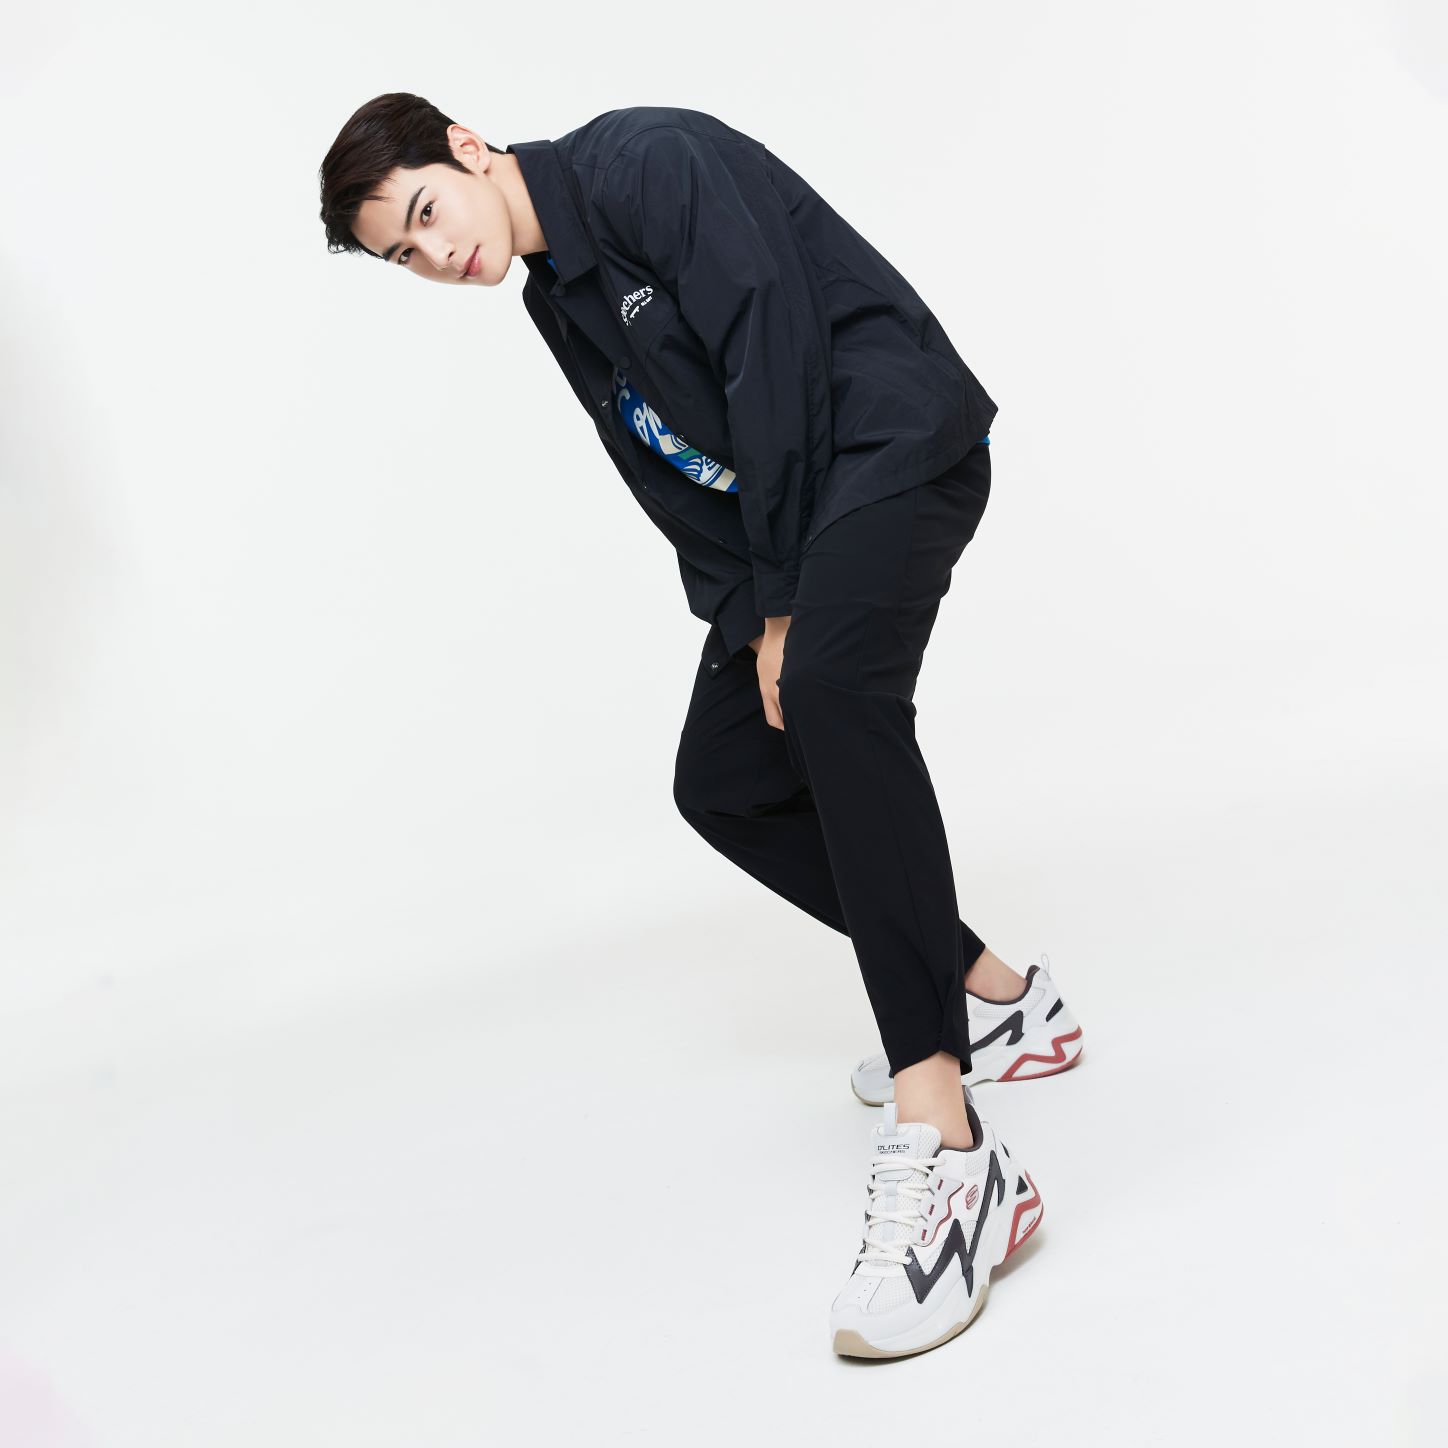 Skechers Woos Top South Korean Pop Idol,Cha Eun-Woo, To Be Its New Regional  Brand Ambassador - Hong Kong Times Square